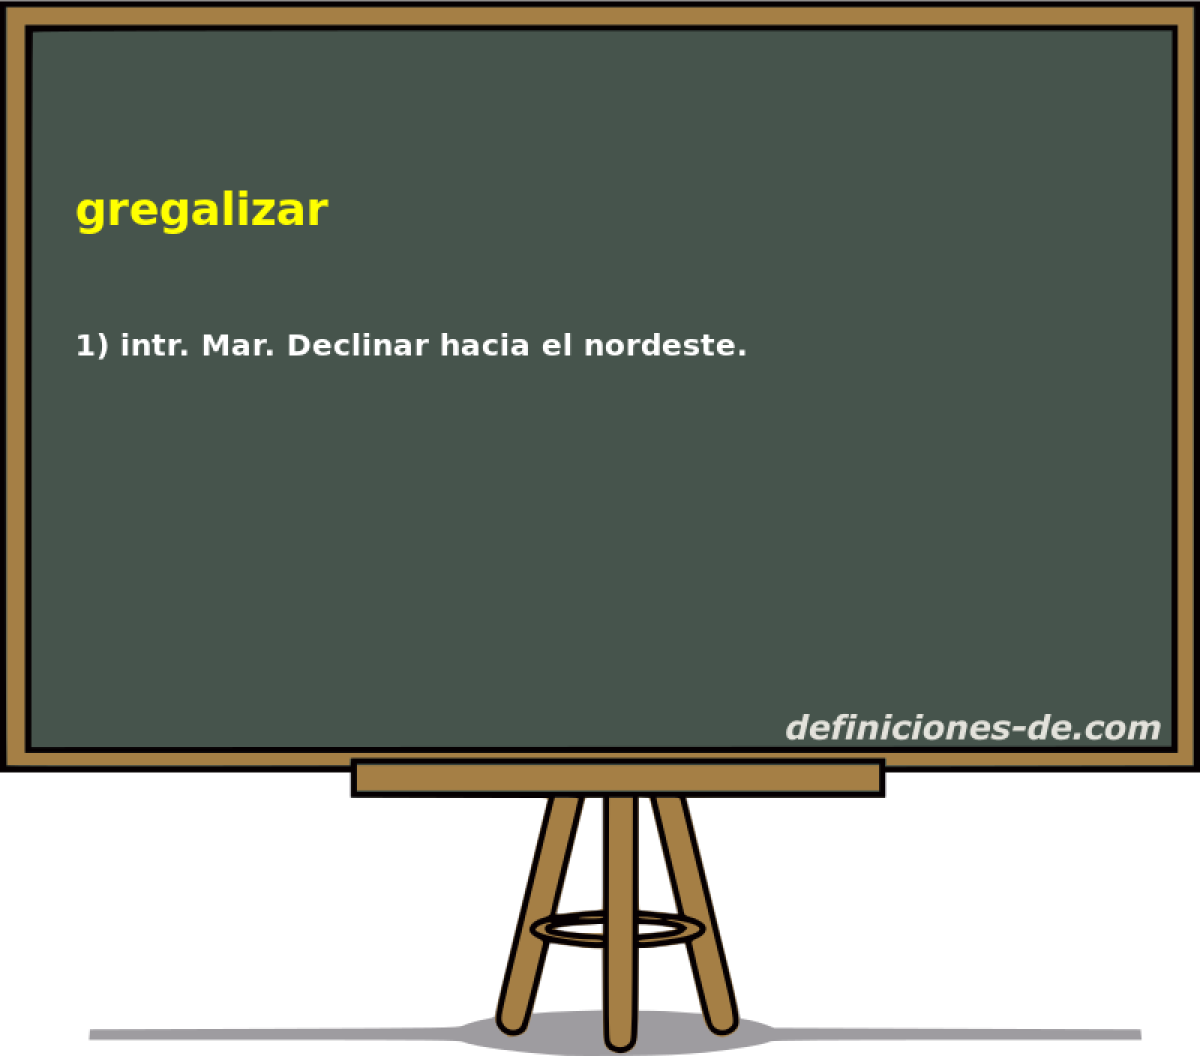 gregalizar 